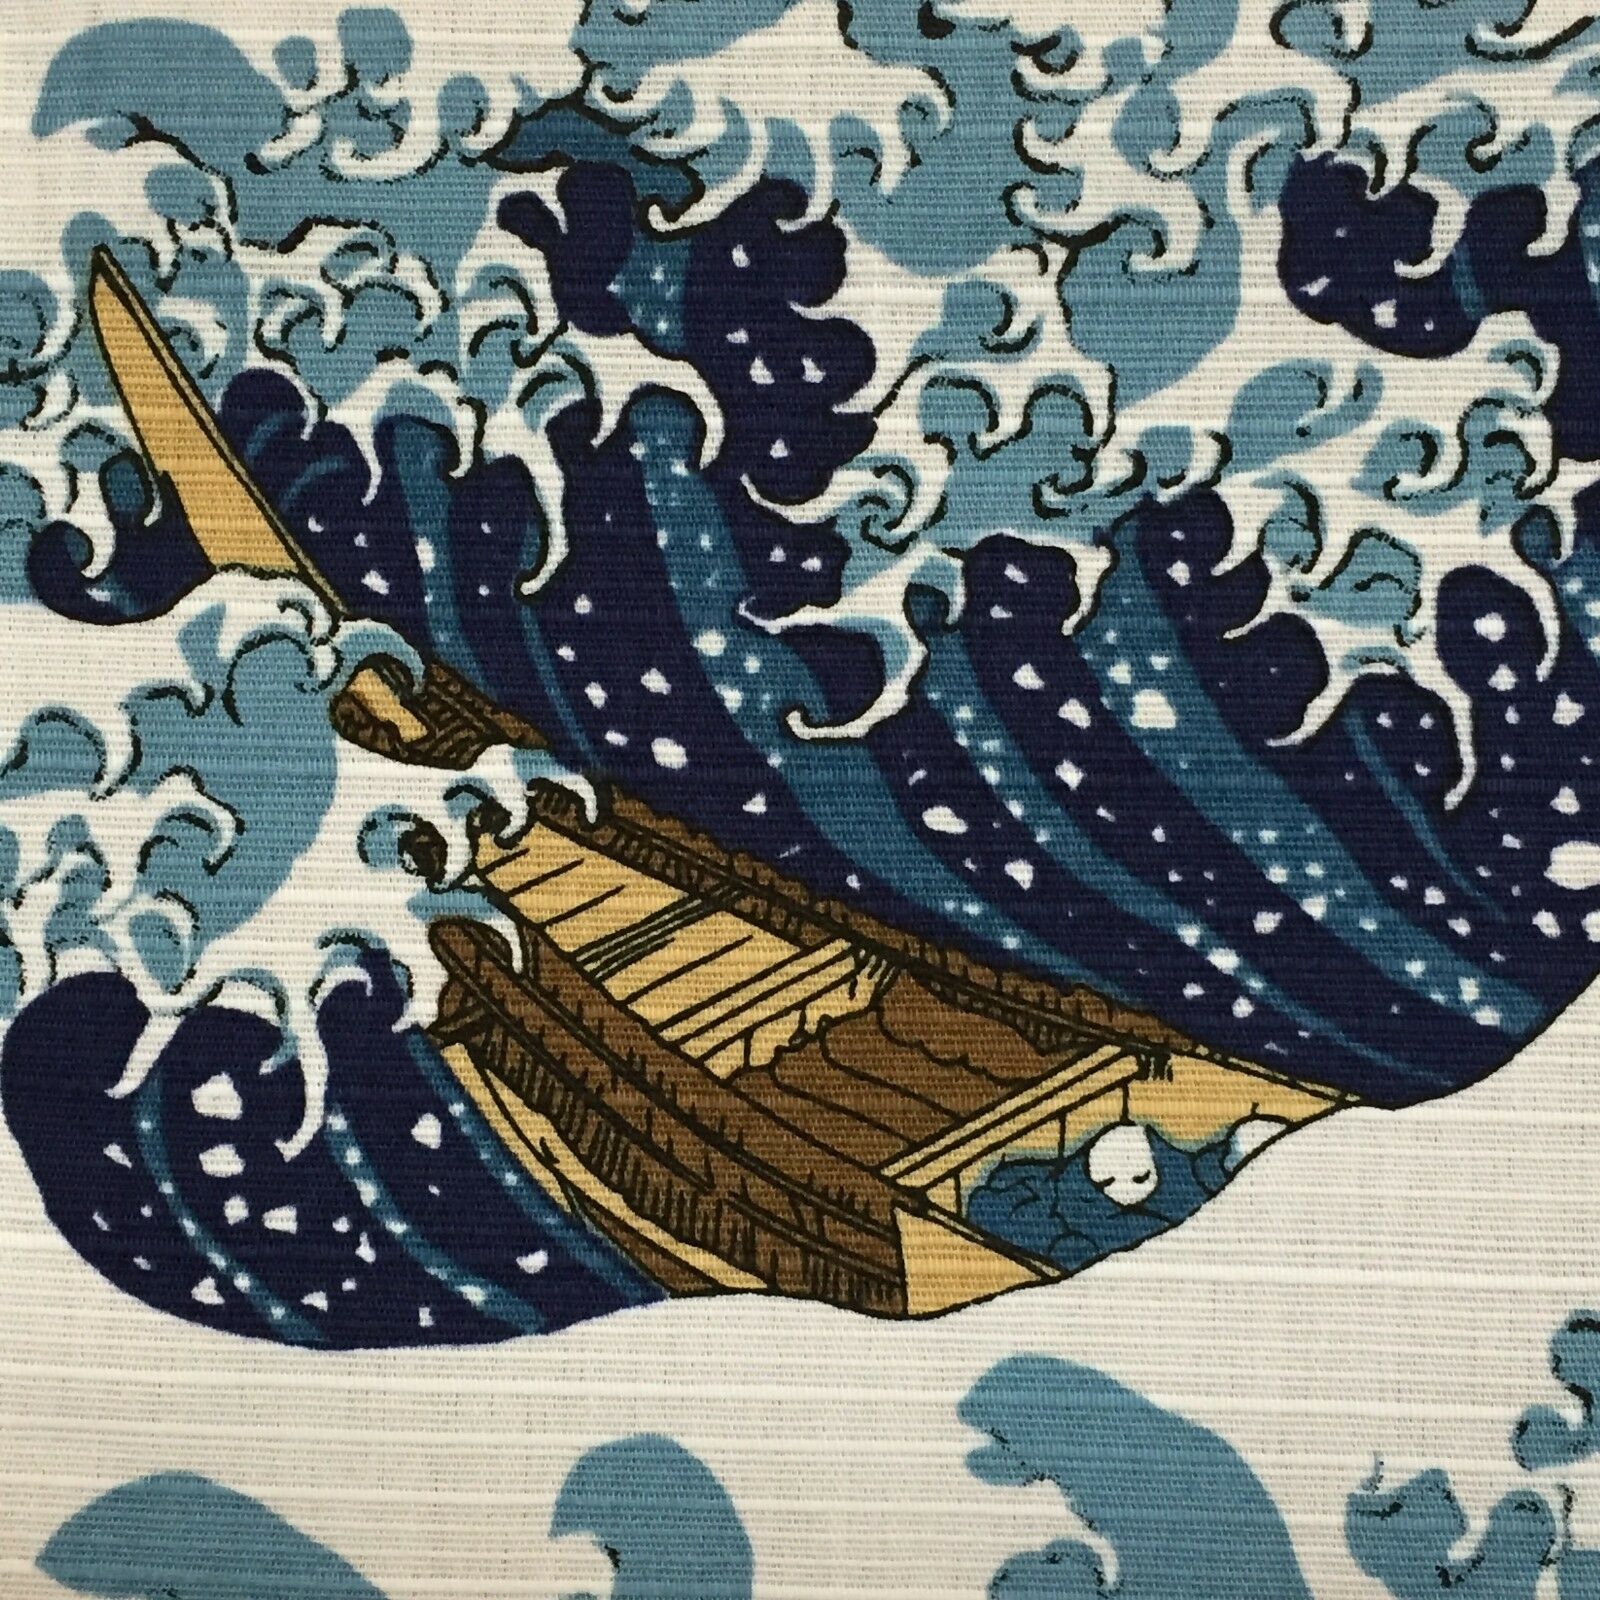 Fuji Kyoto Japanese Furoshiki Wrapping Cloth Hokusai Ukiyoe Great Wave Mt 